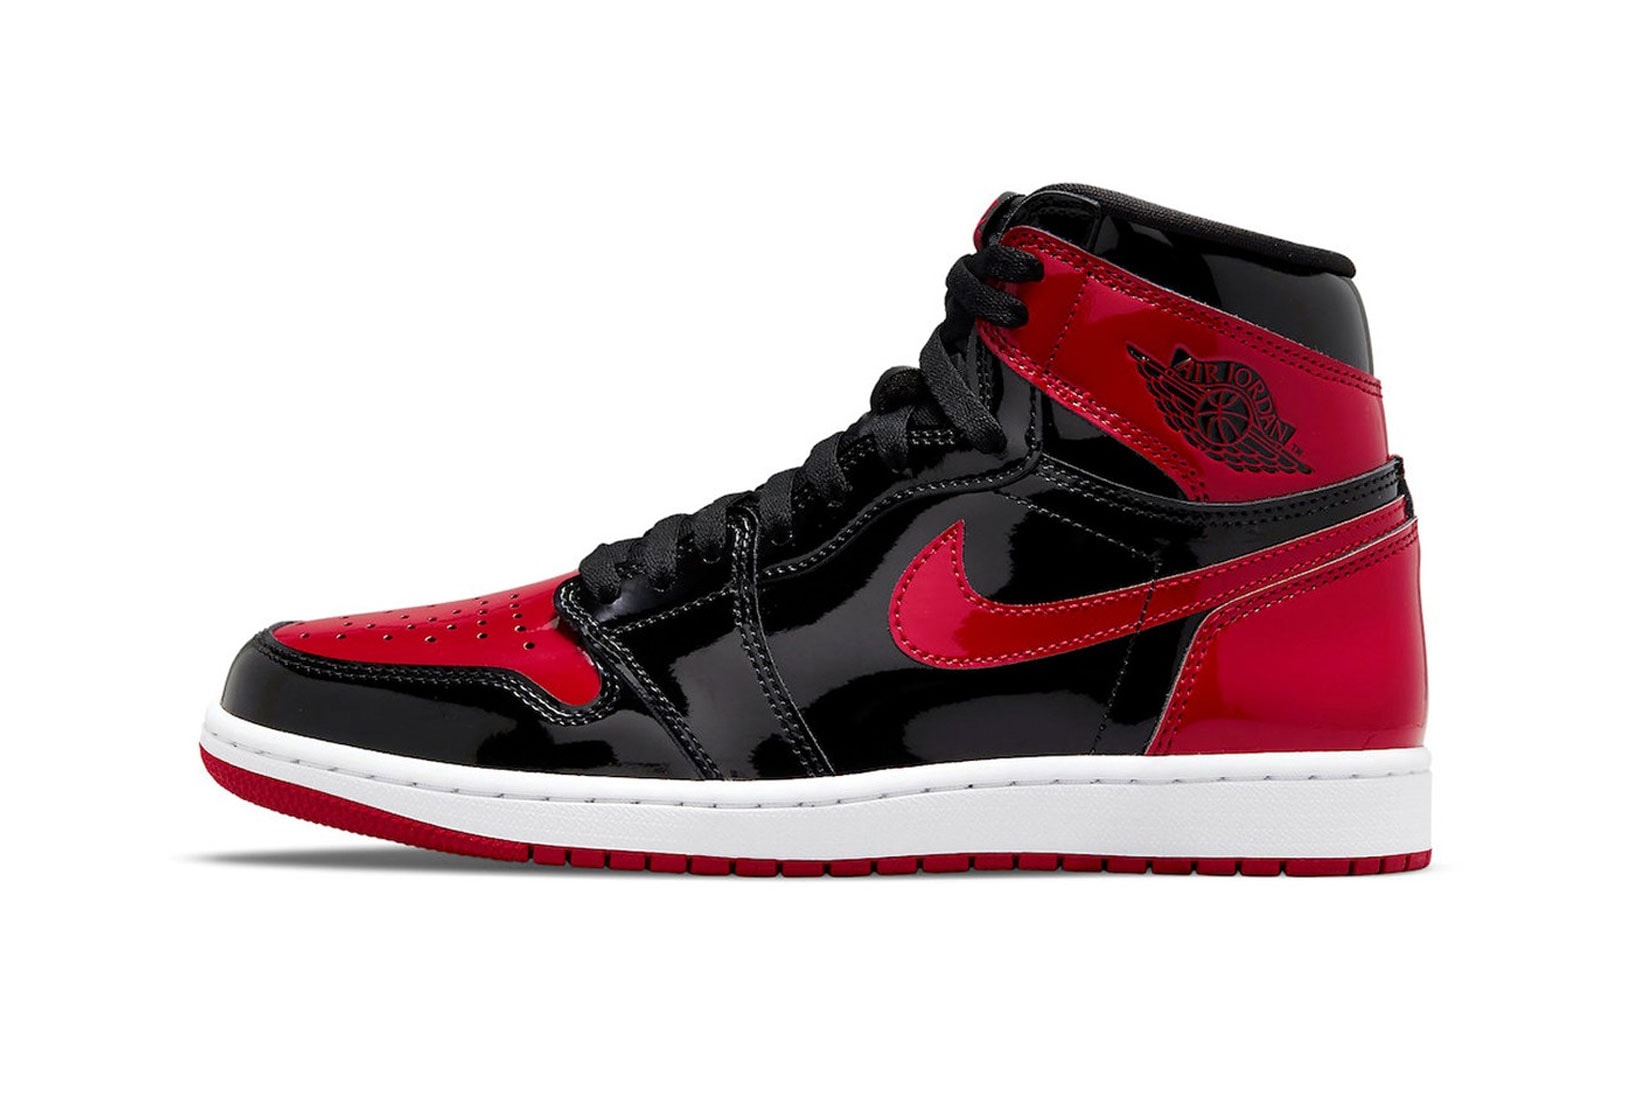 Nike Air Jordan 1 High OG Patent Bred Red Black Sneakers Laterals